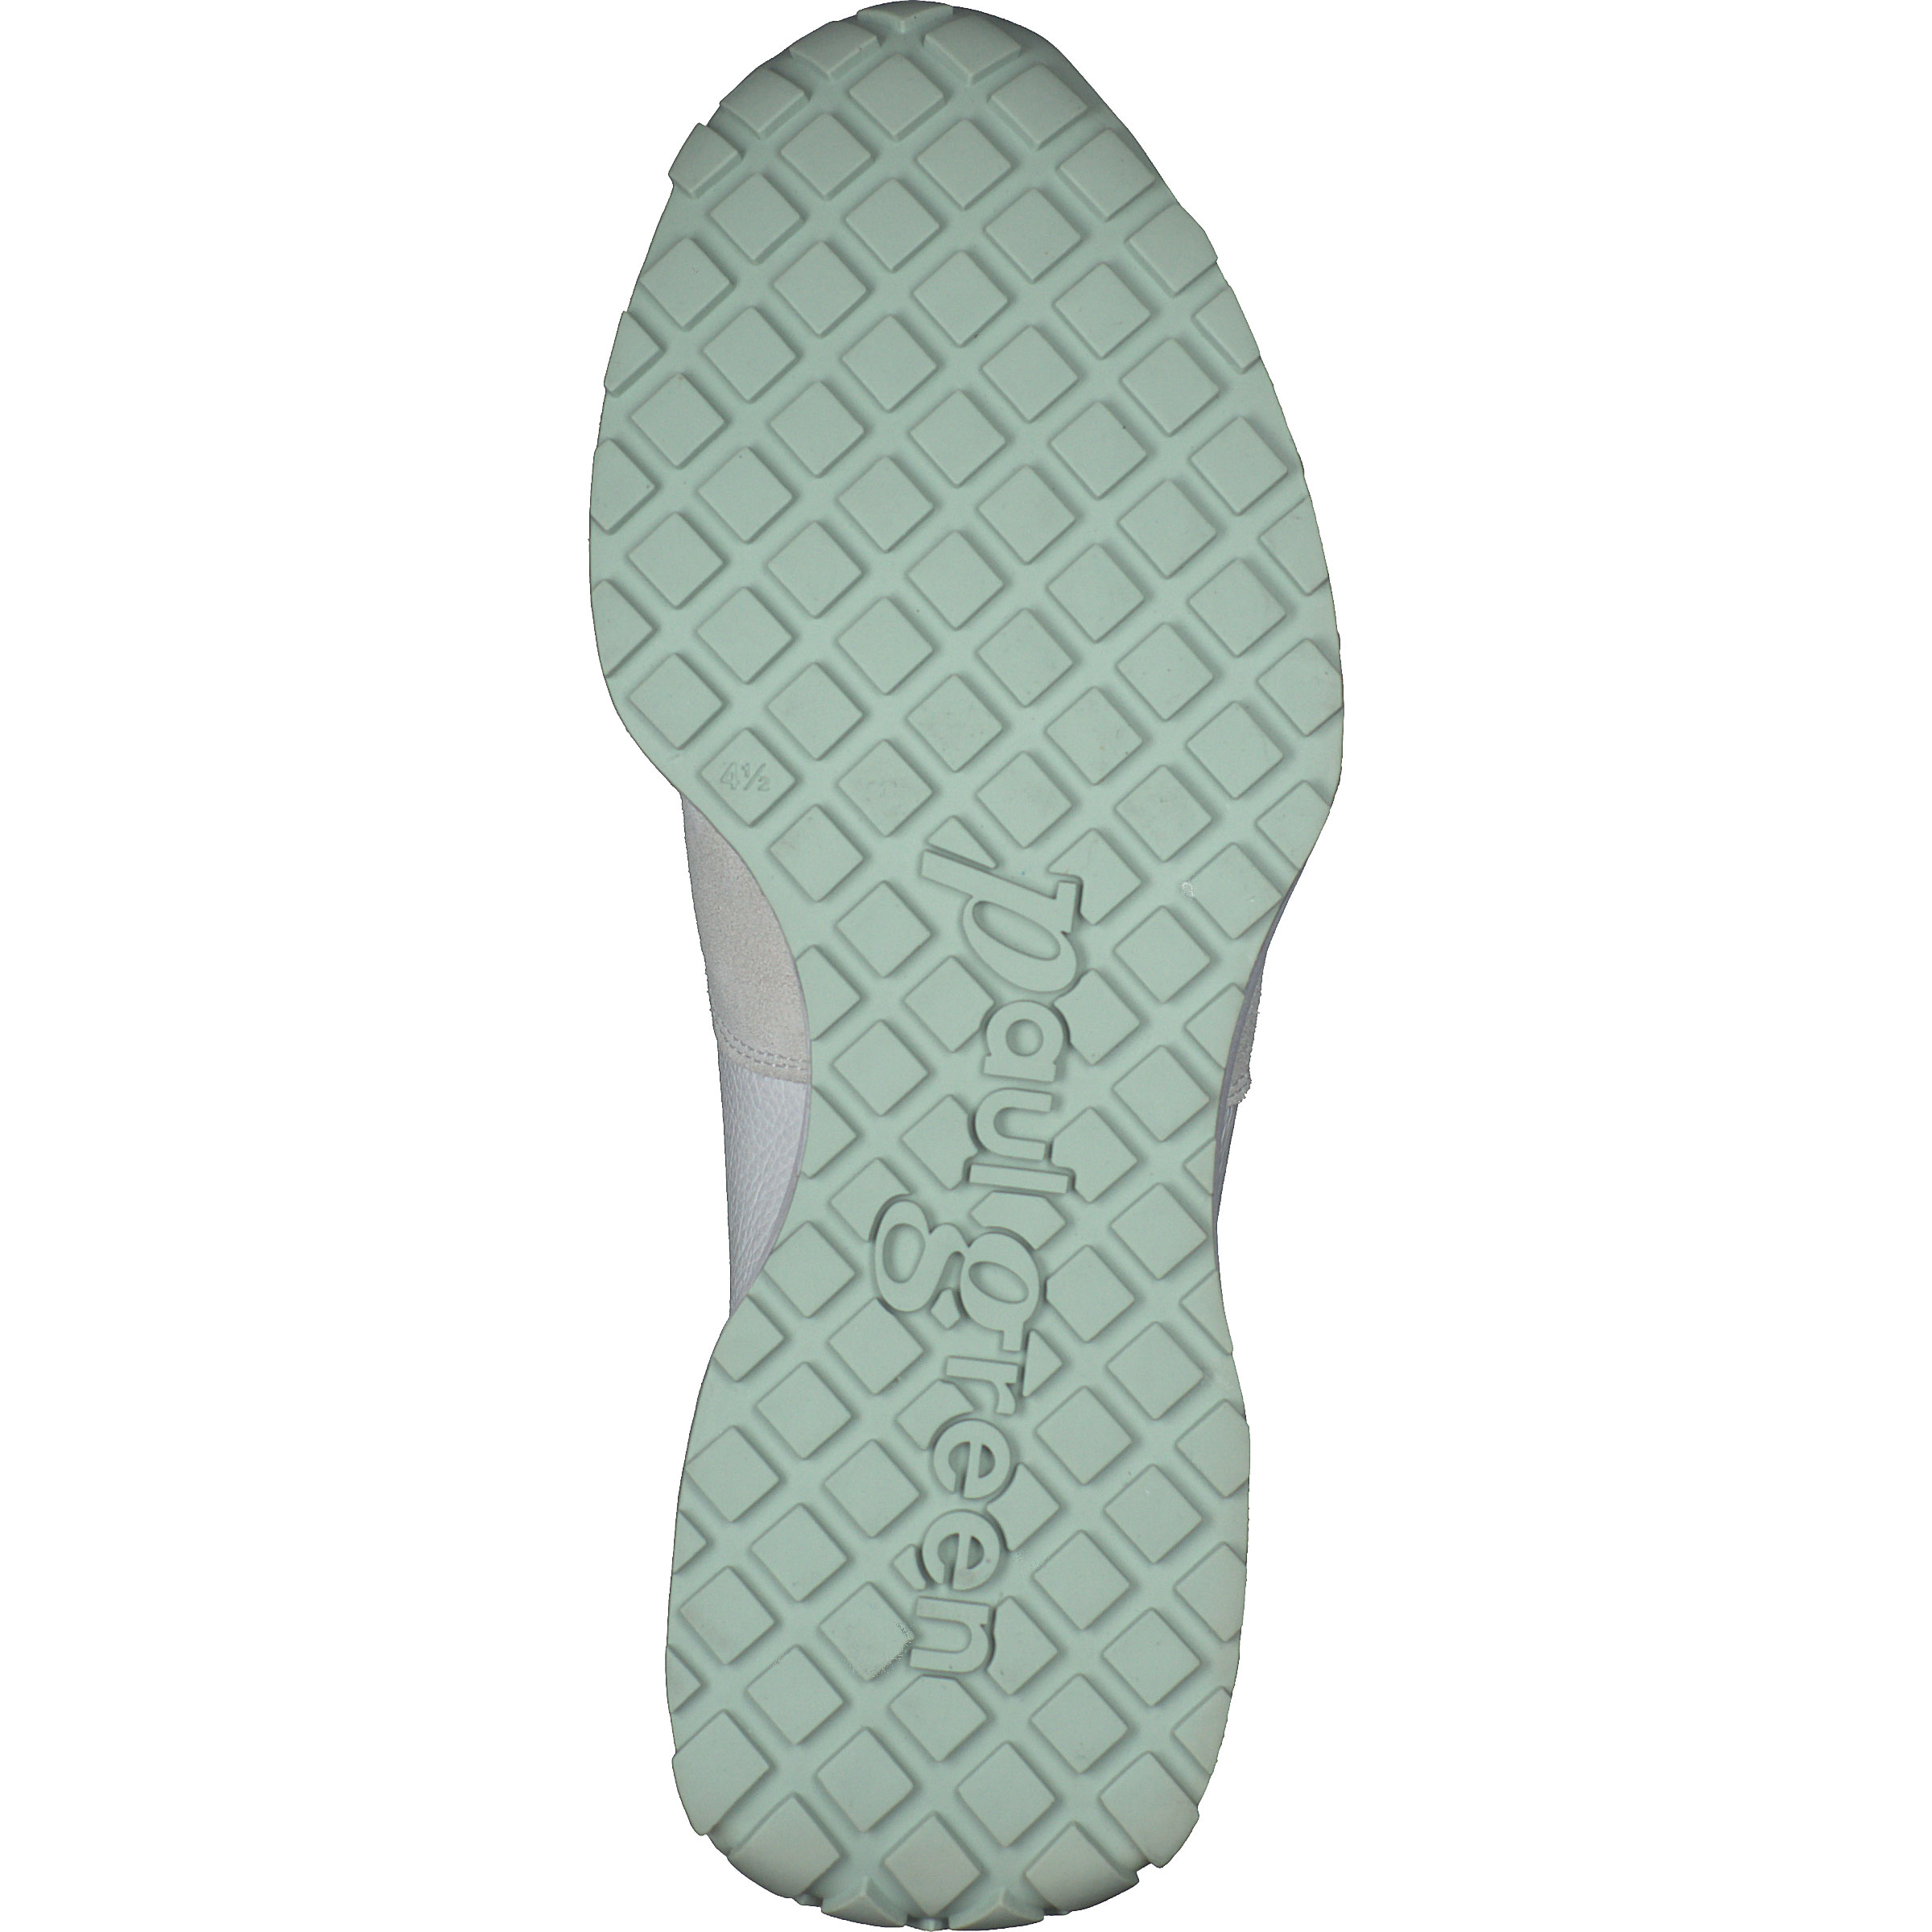 Paul Green Sneaker - White / Mint Leather